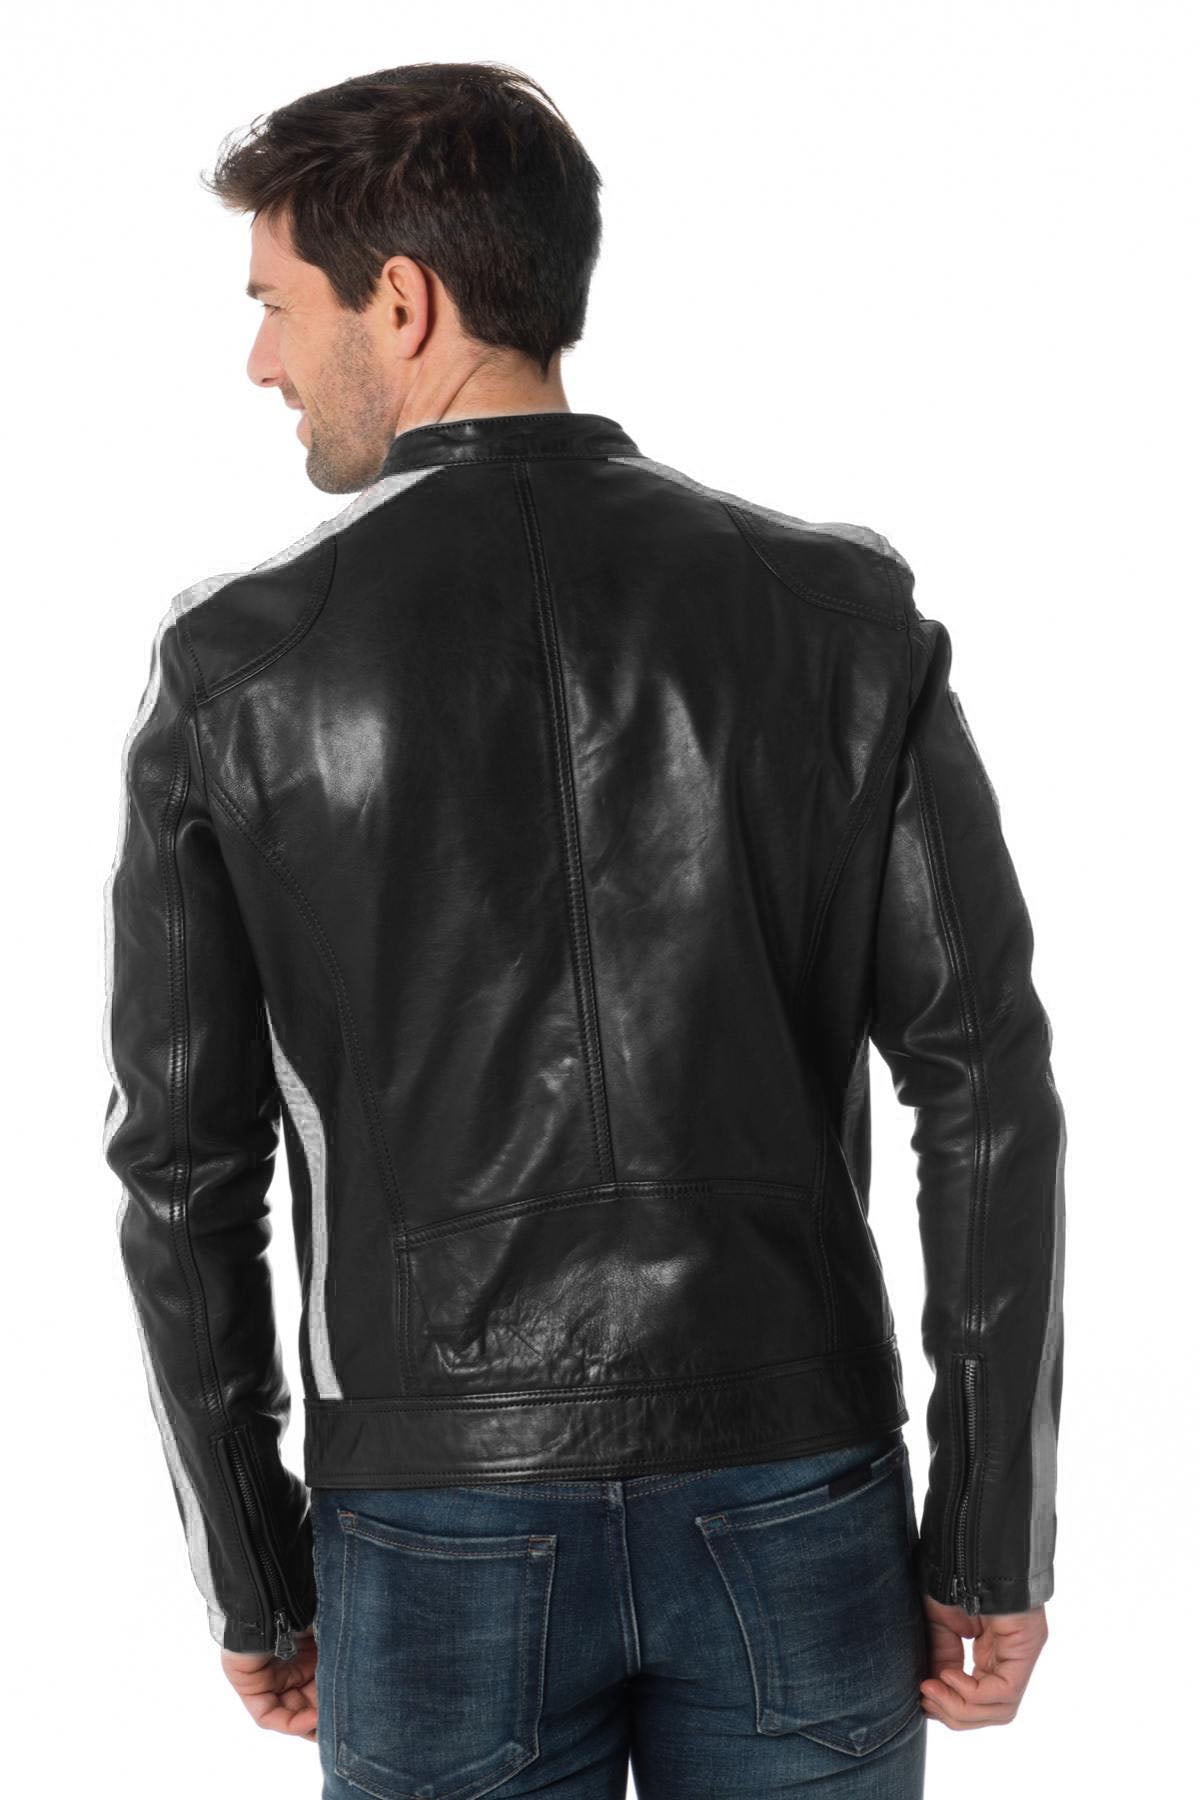 Men Genuine Leather Jacket MJ 26 SkinOutfit